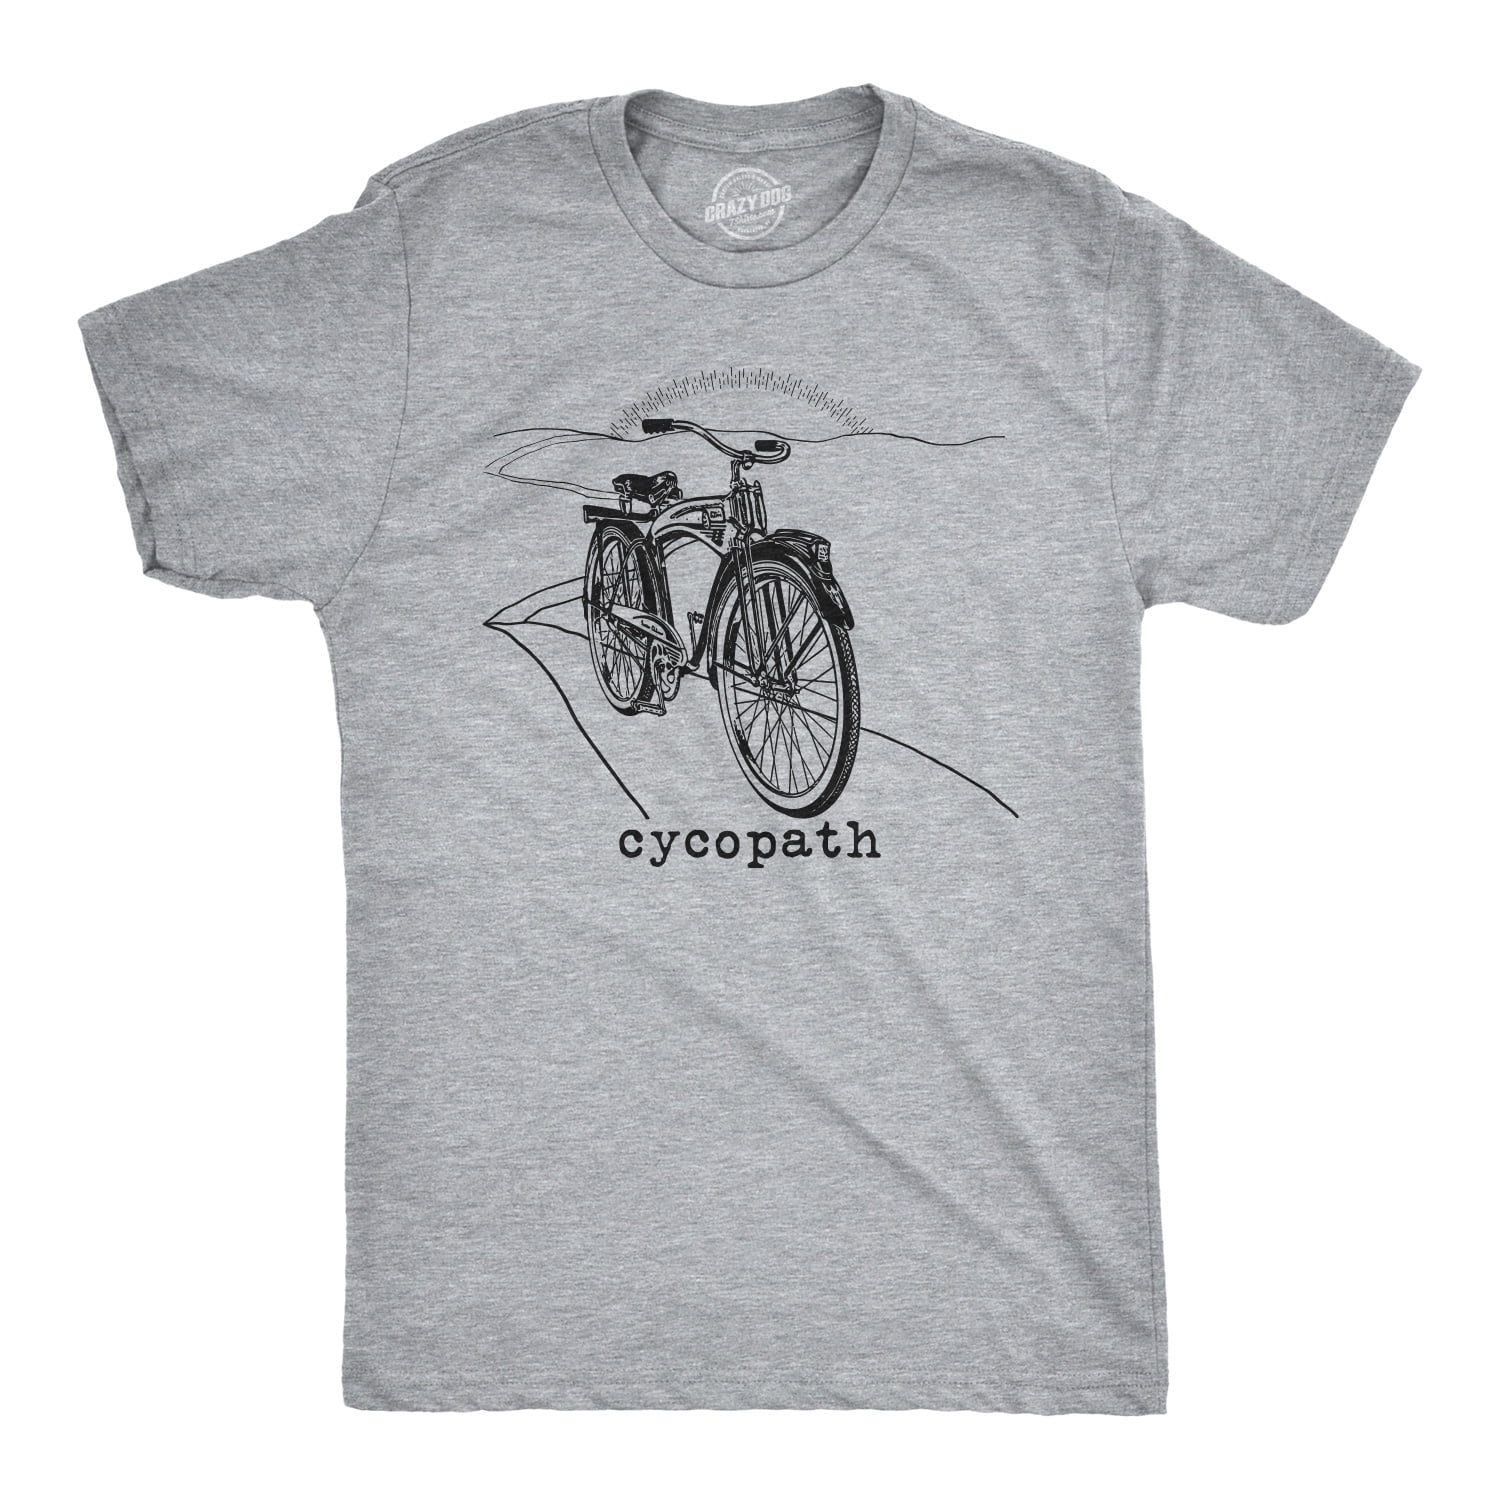 Cycler Like a Regular Girl Only Way Cooler Shirt Bike Gift Bike Shirt Bicycle Shirt Cycologist Bicycle tshirt Bike tshirt Cycling gift